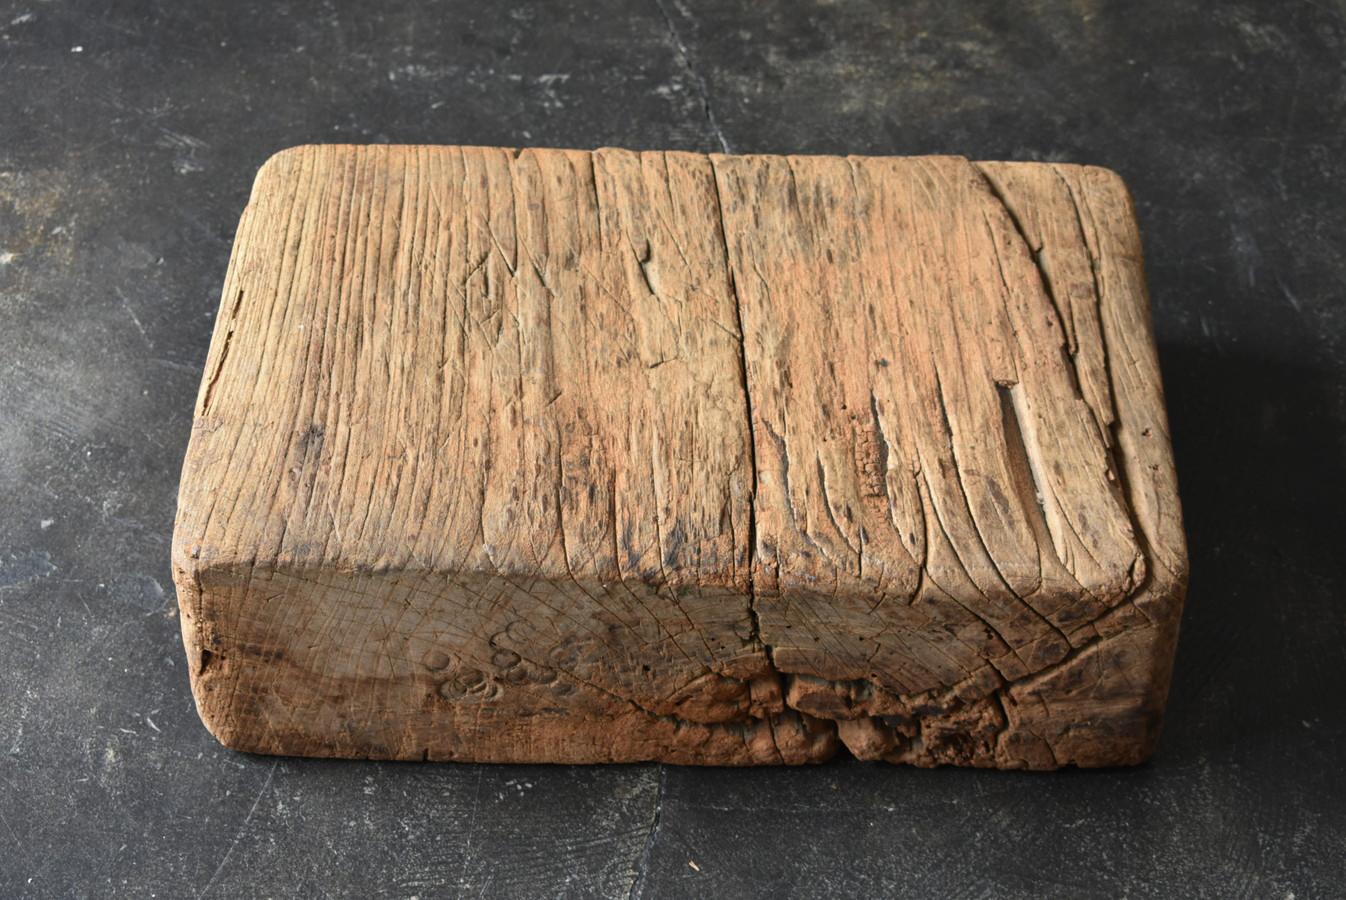 Taisho Workbench Used by a Japanese Craftsman / a Block of Wood / a Wabi-Sabi Board